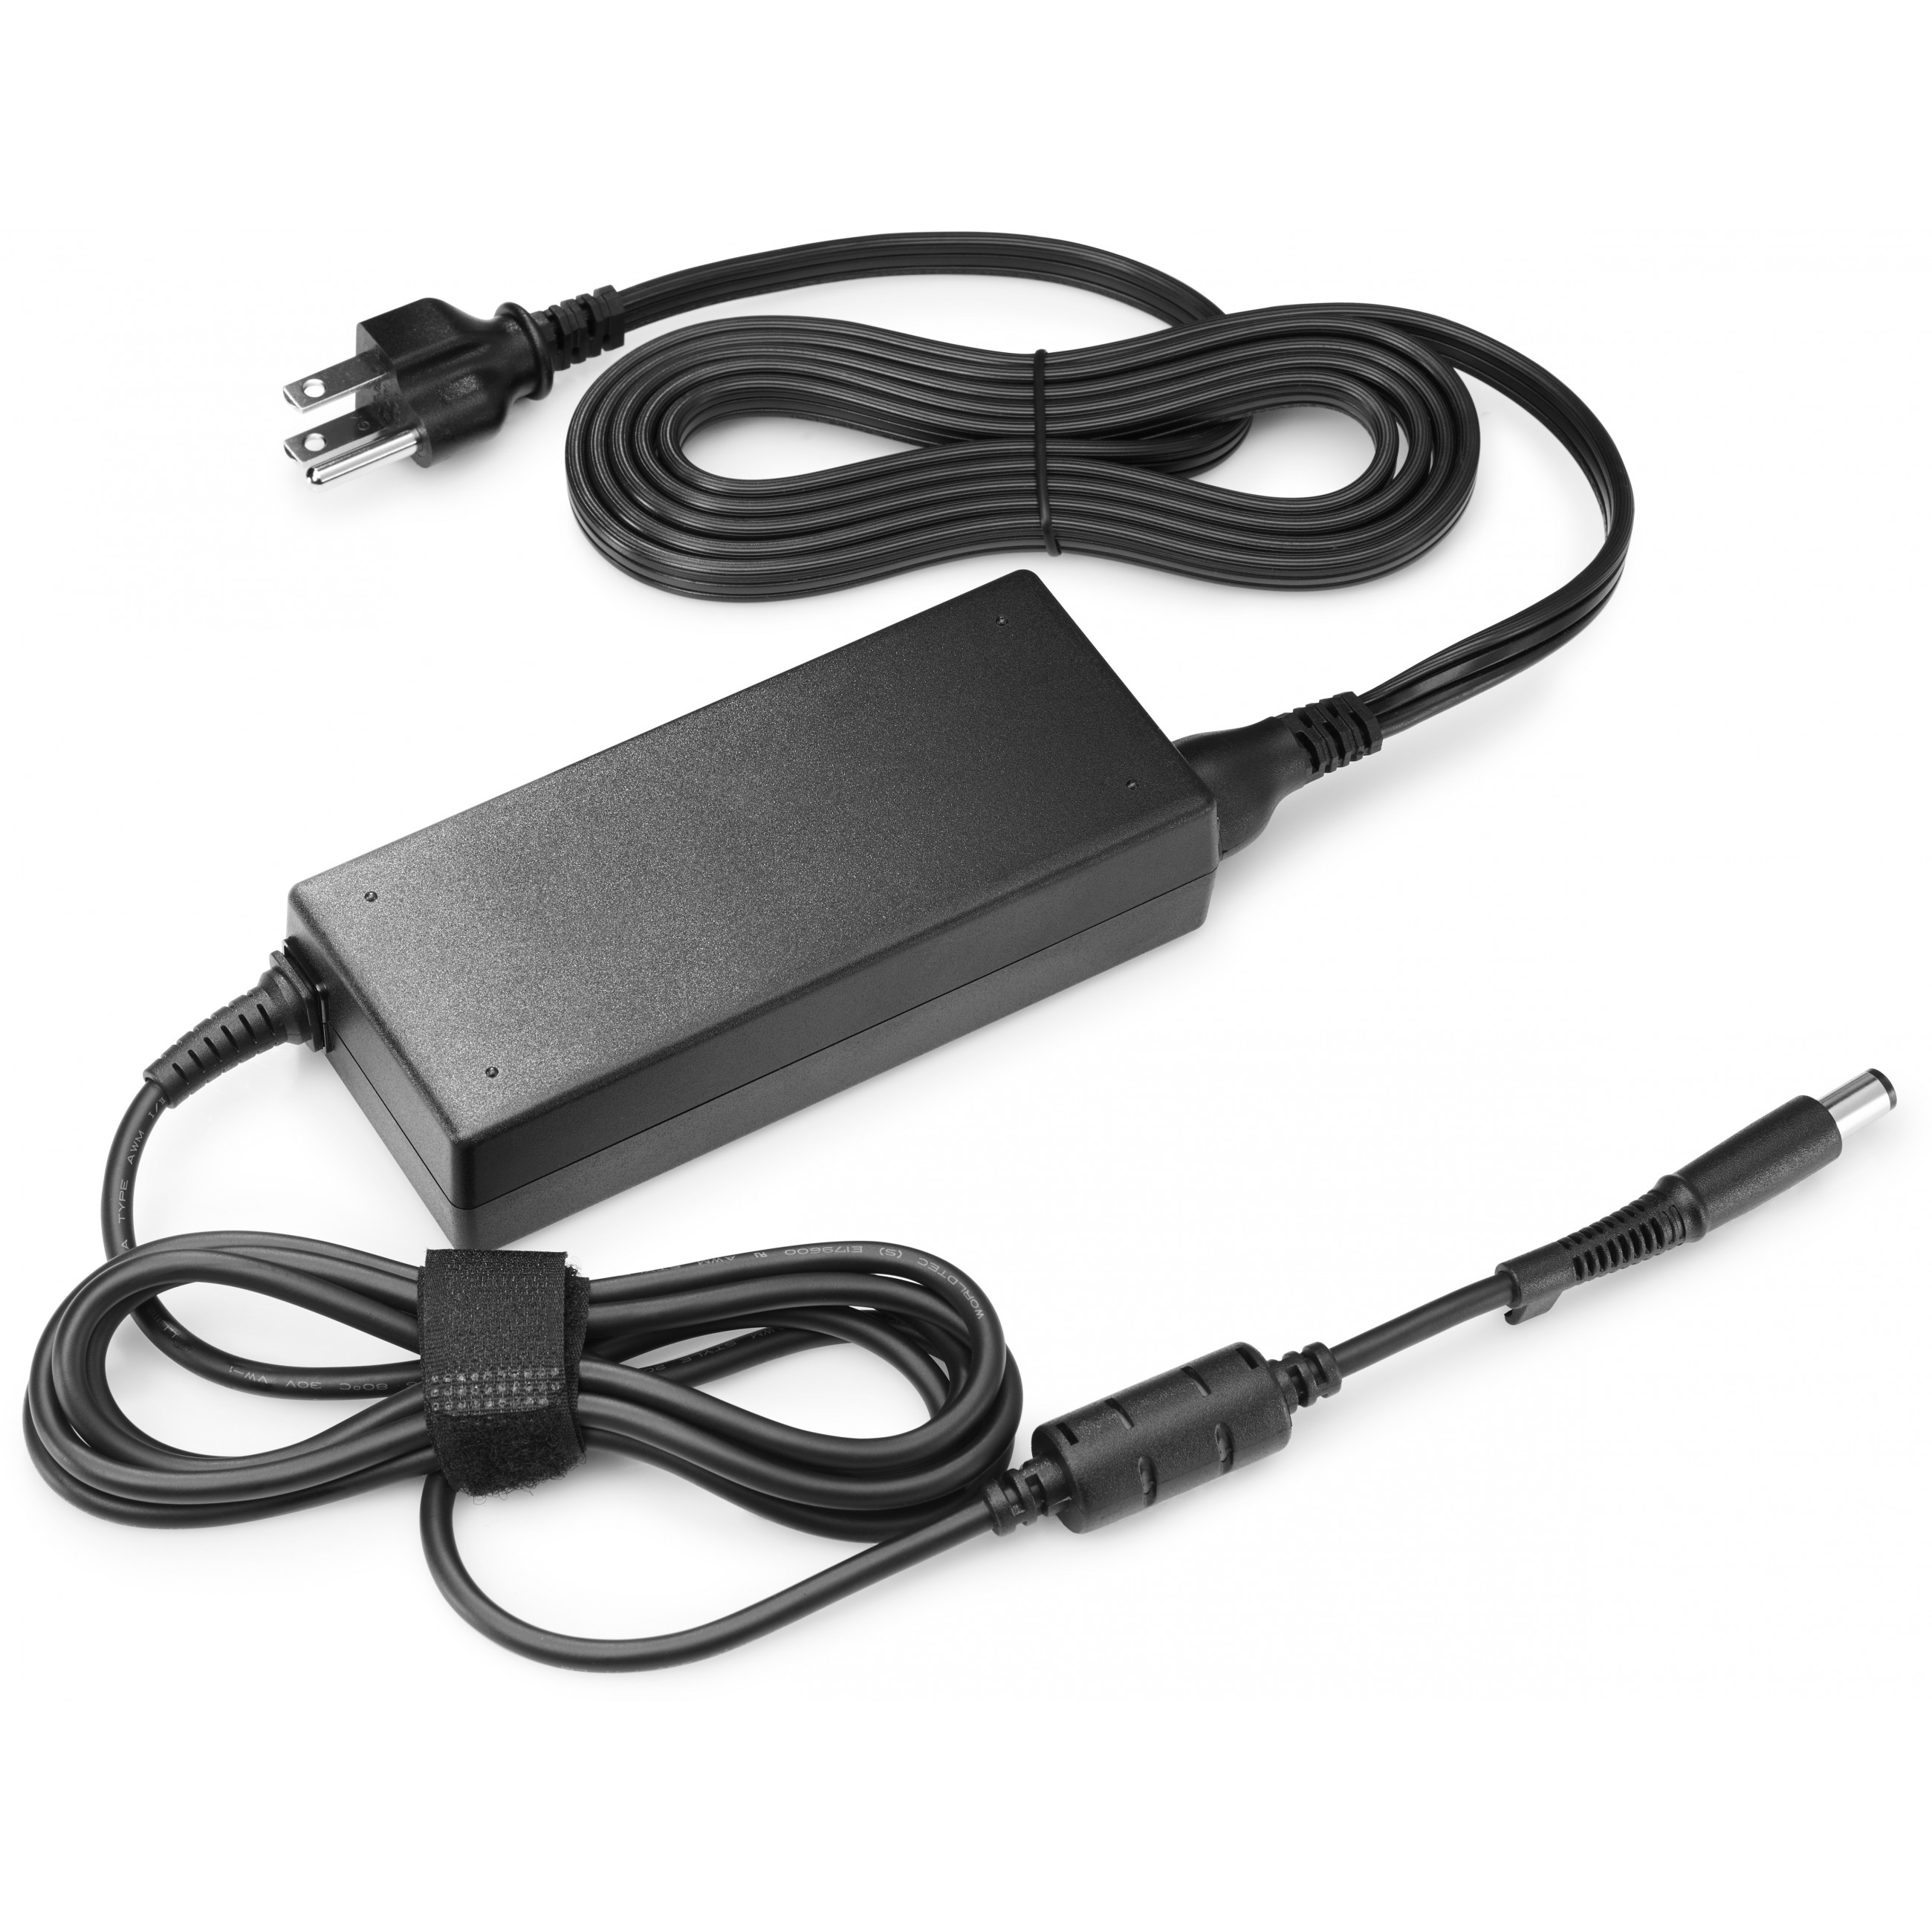 HP Desktop Mini 90w Power Supply Kit power adapter/inverter - L4R65AA#ABB